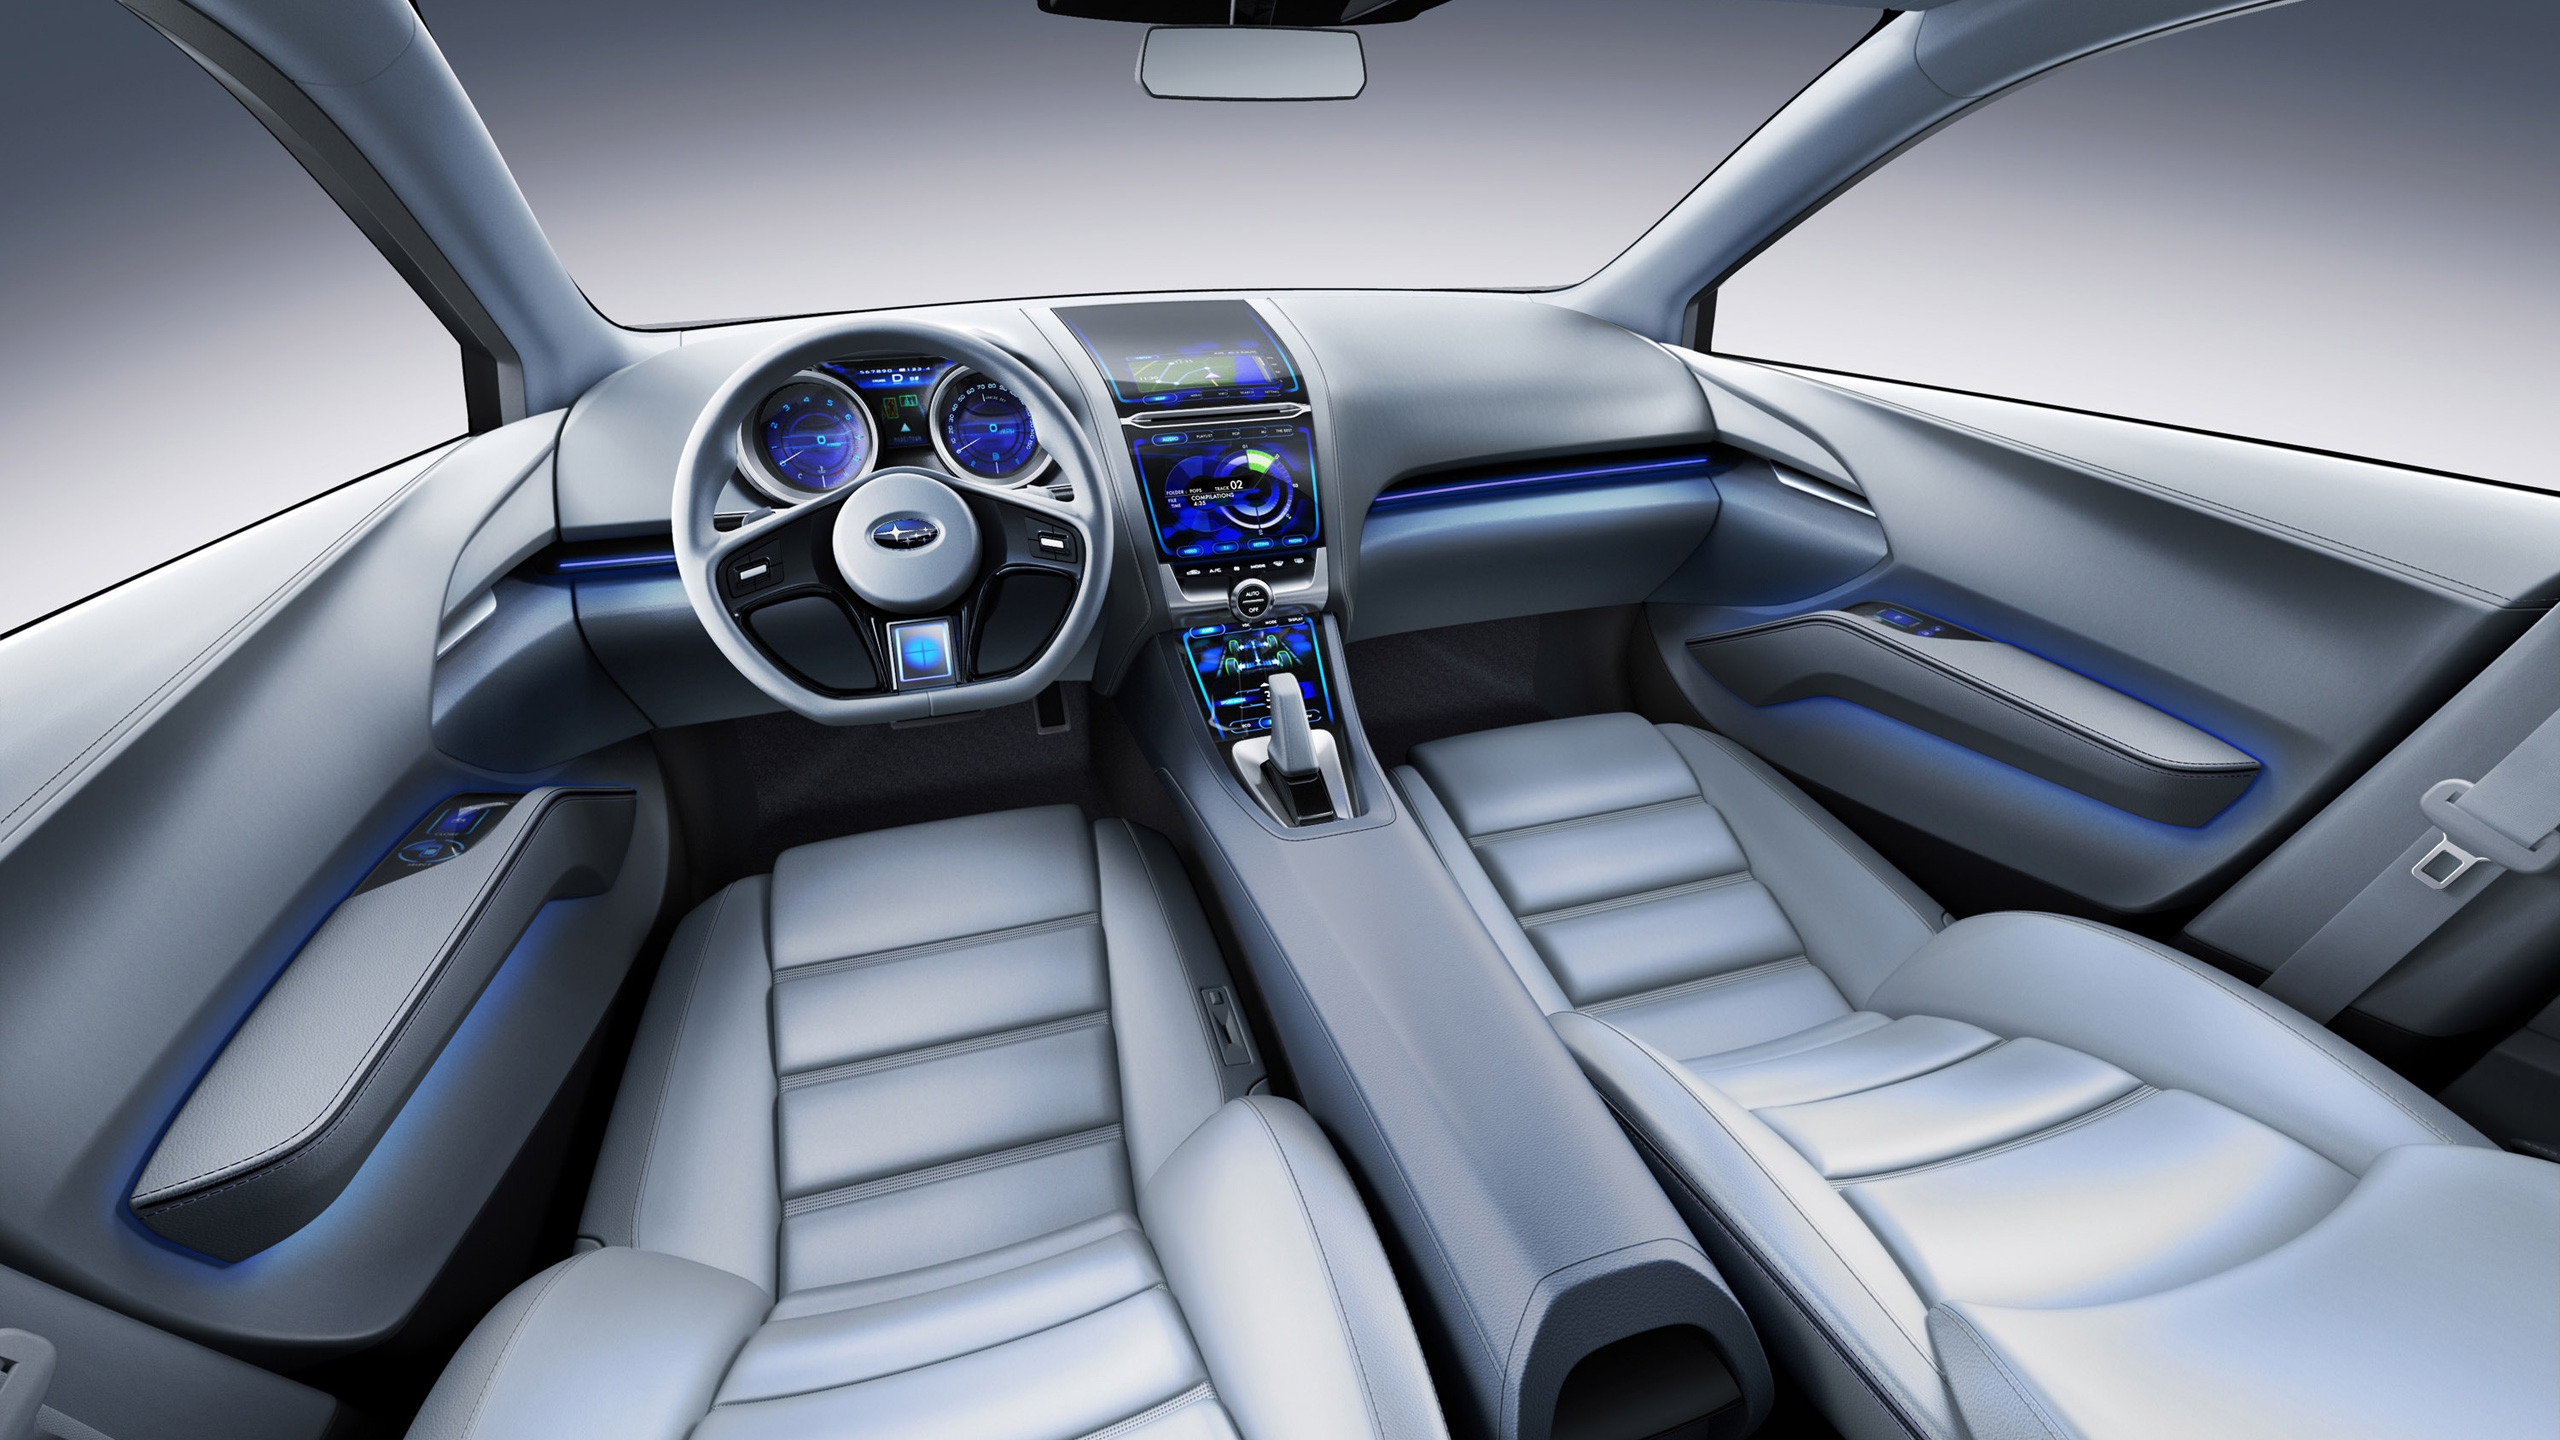 Subaru Impreza Concept Interior for 2560x1440 HDTV resolution